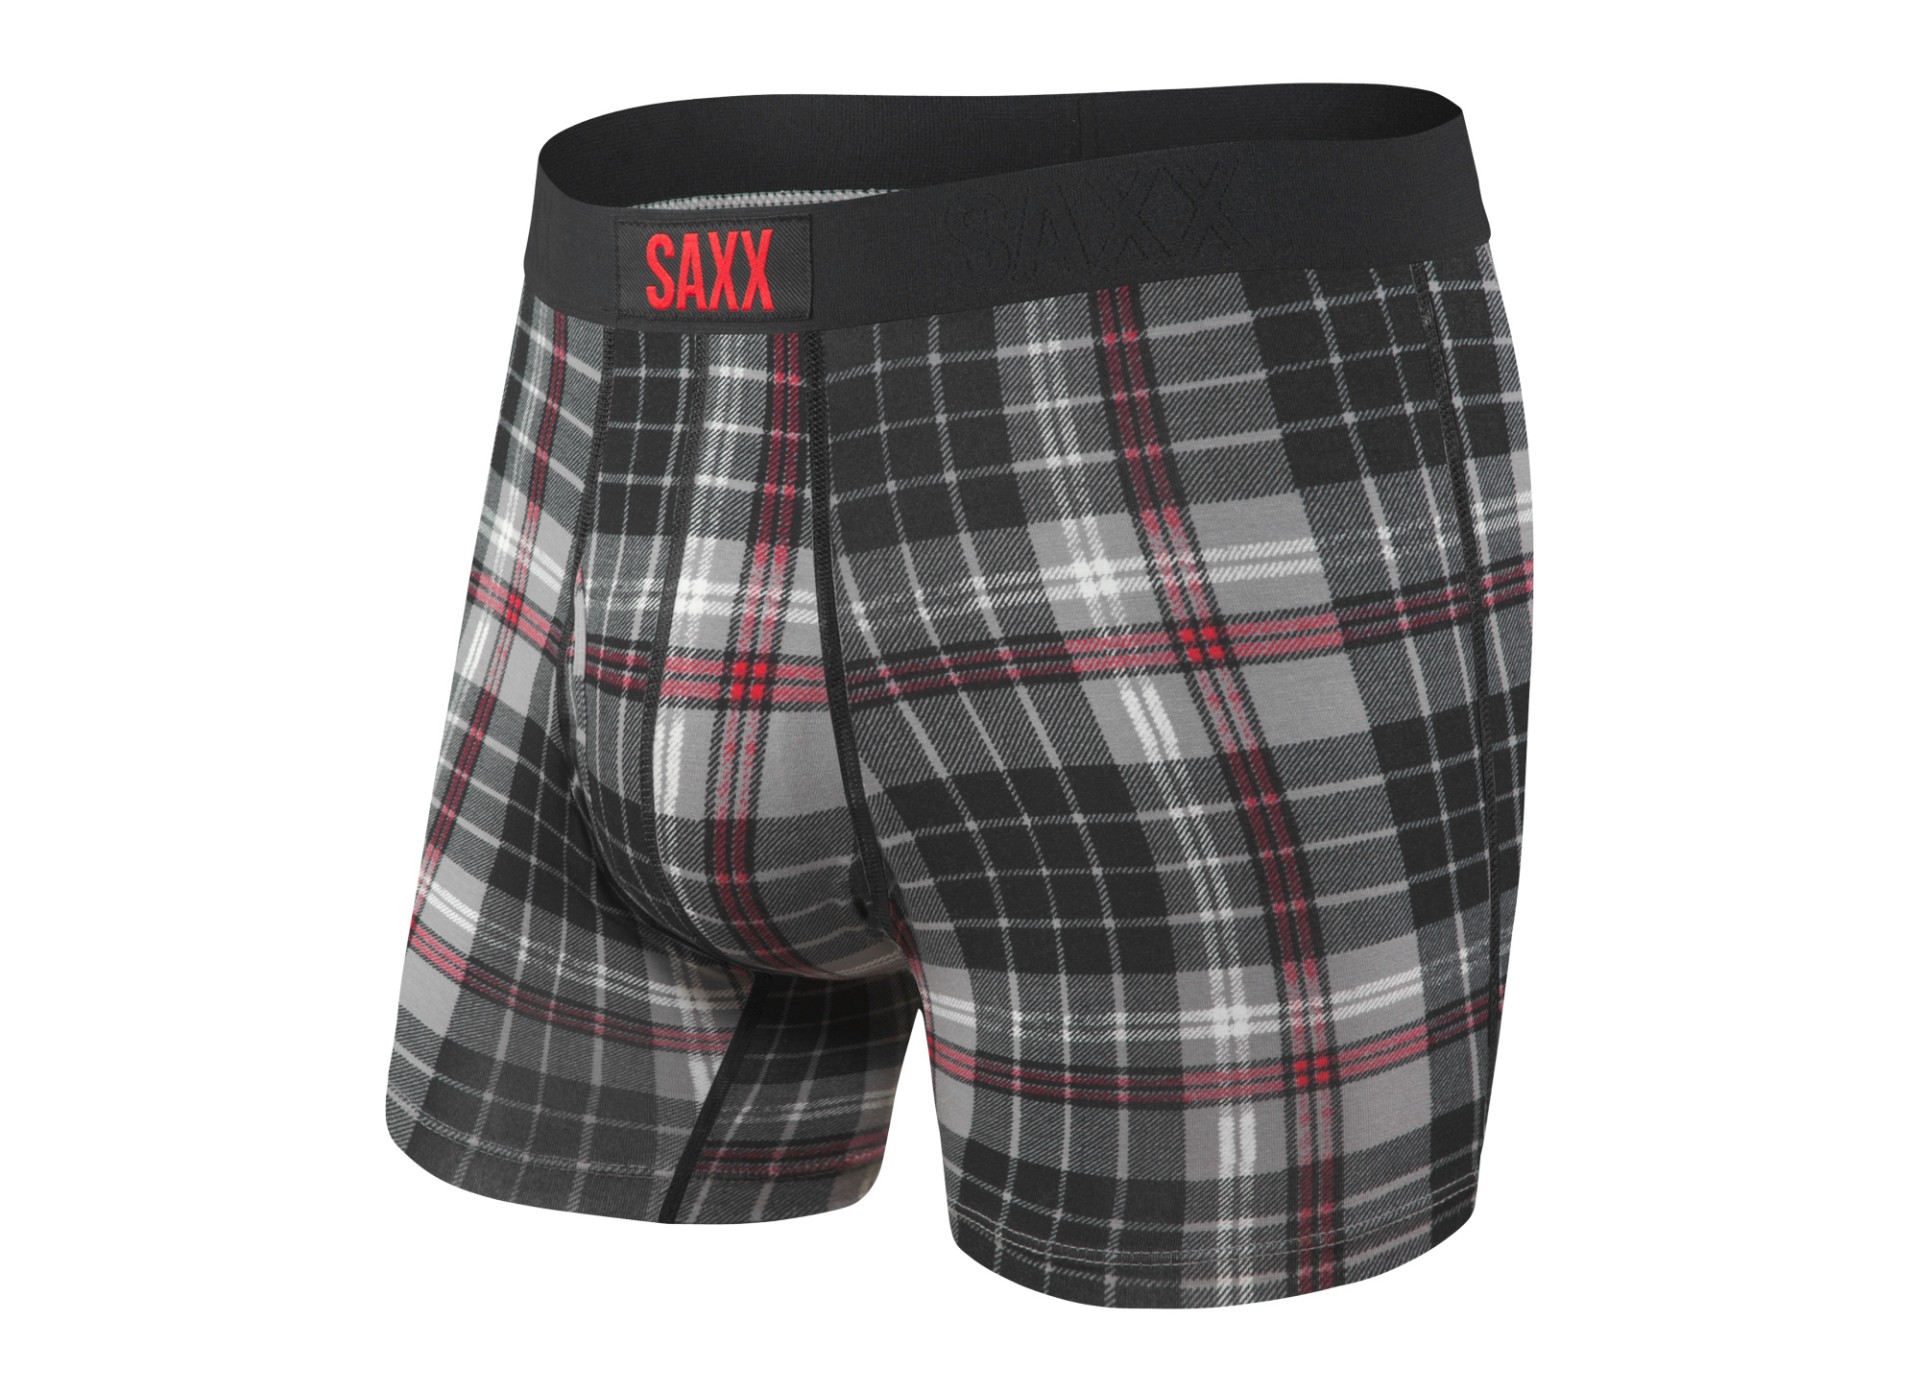 Saxx – The Gear Journal